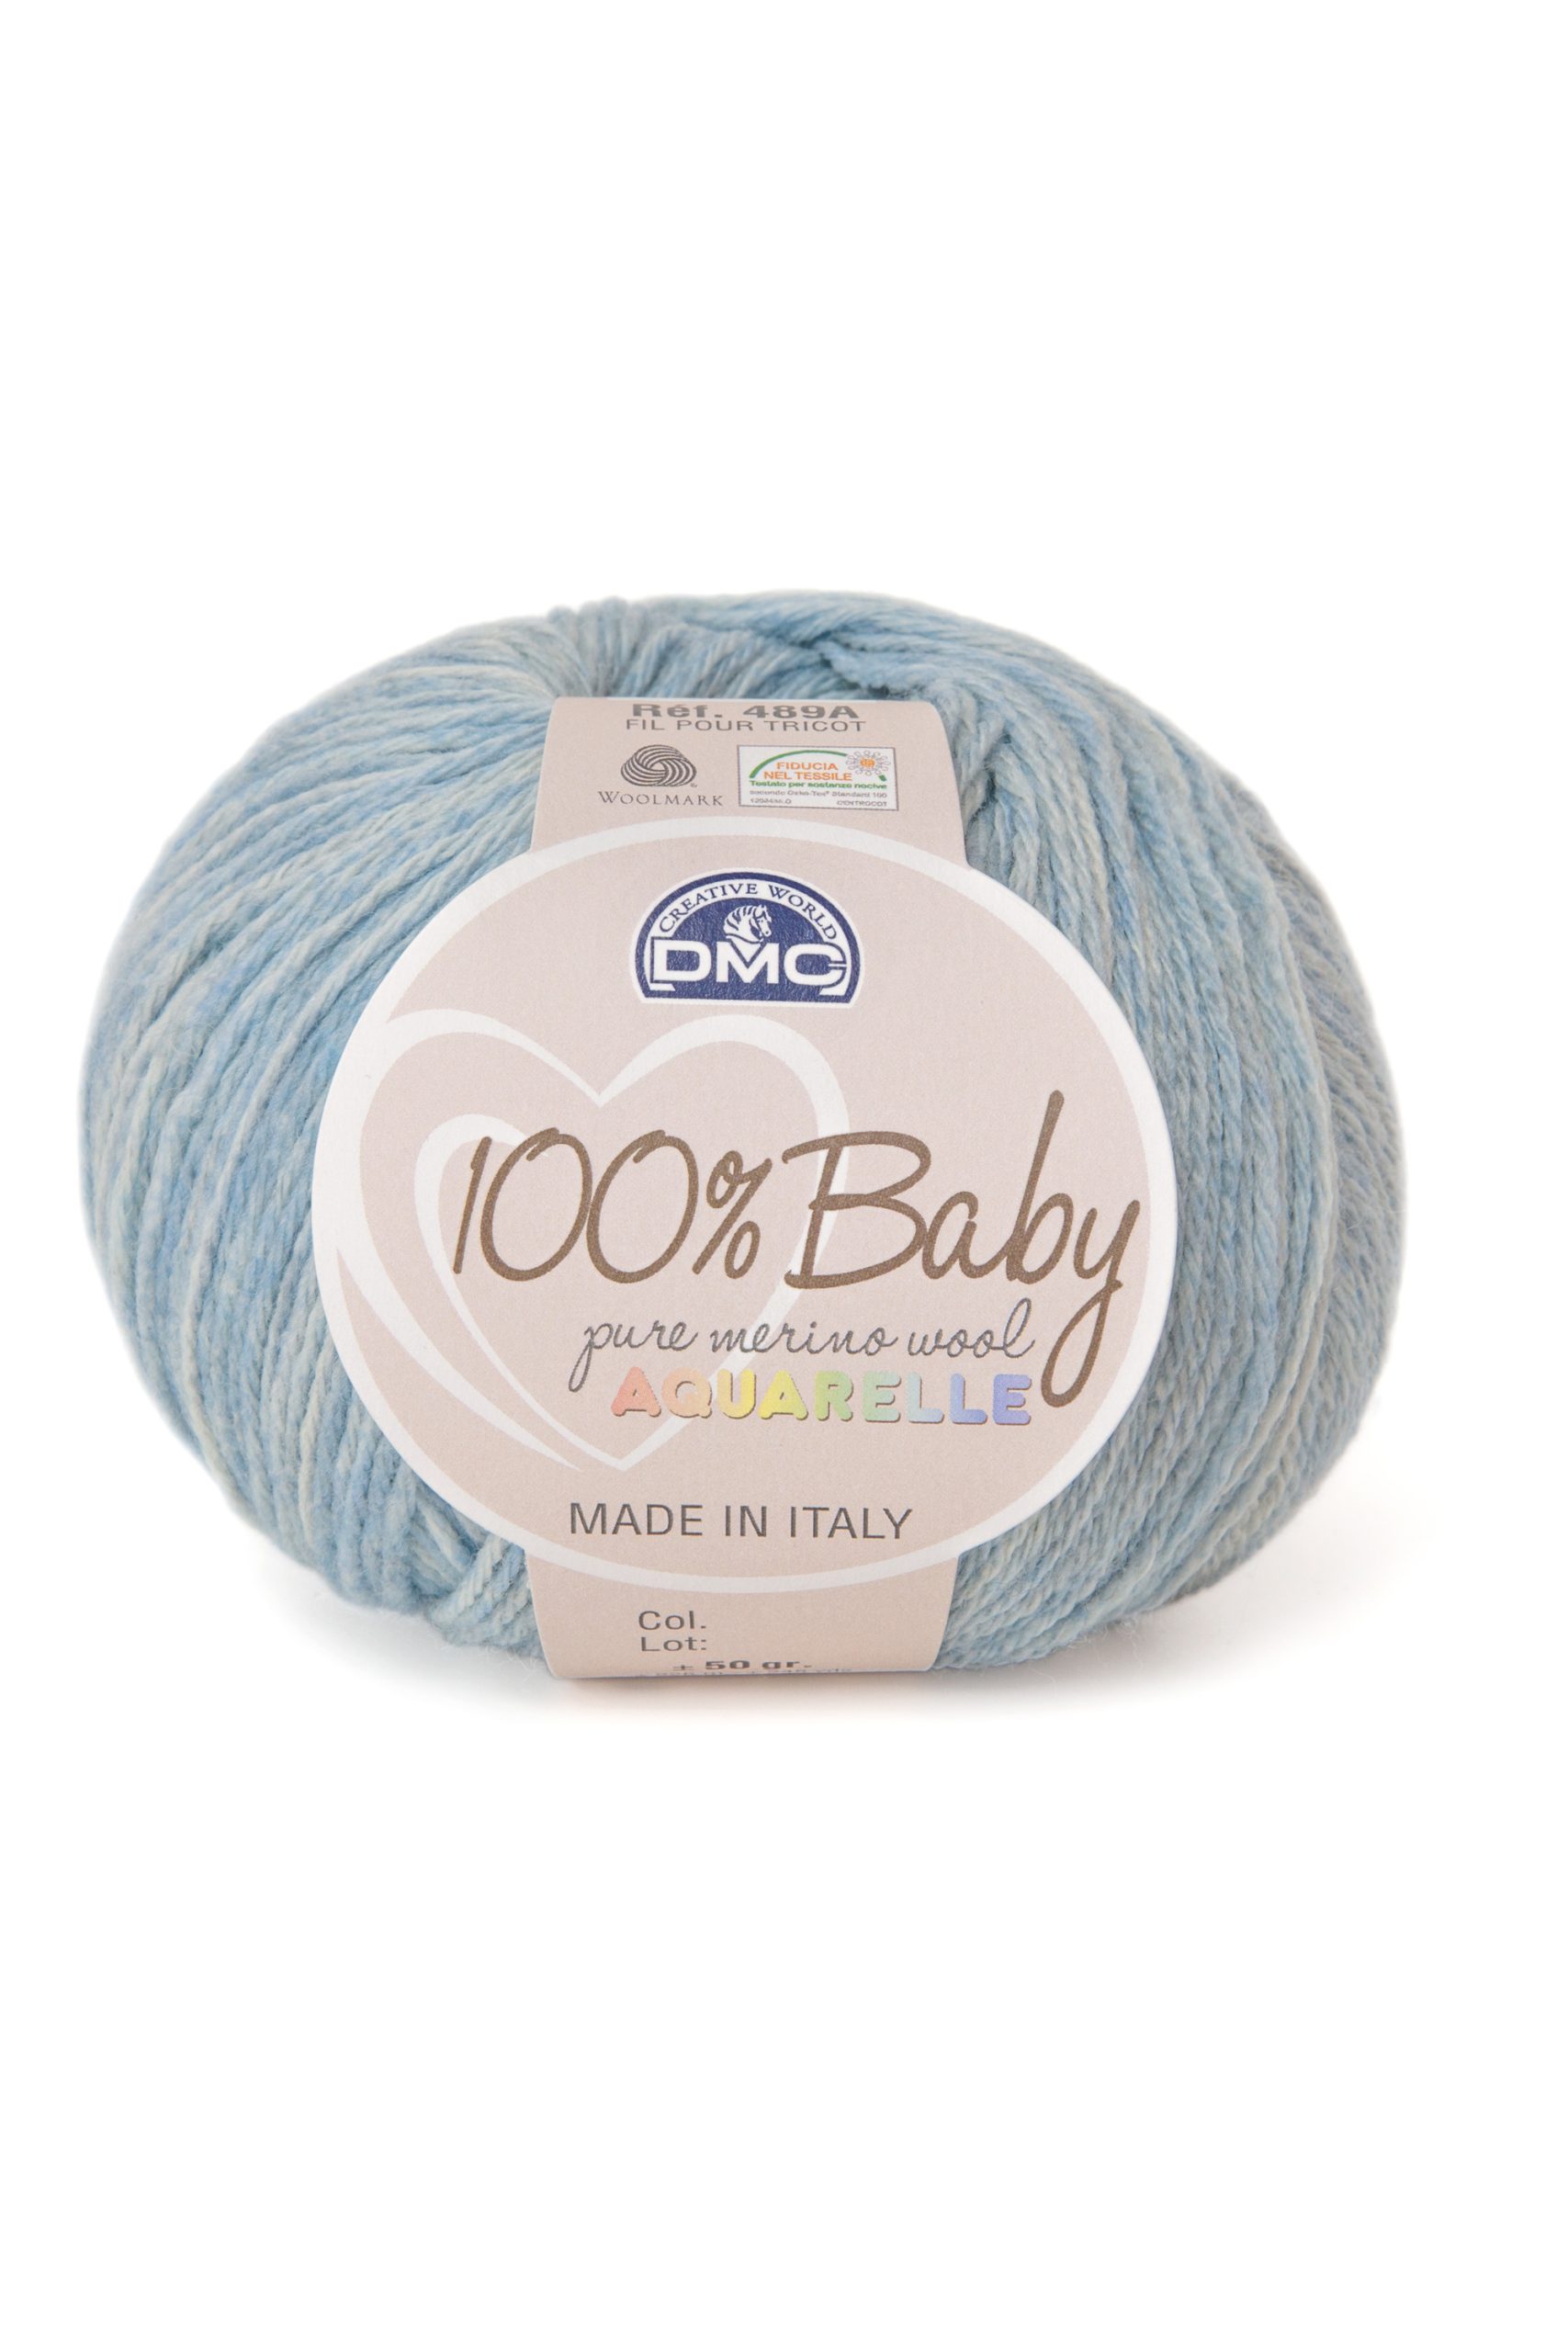 Lana Dmc 100% Baby Aquarelle Colore 1380